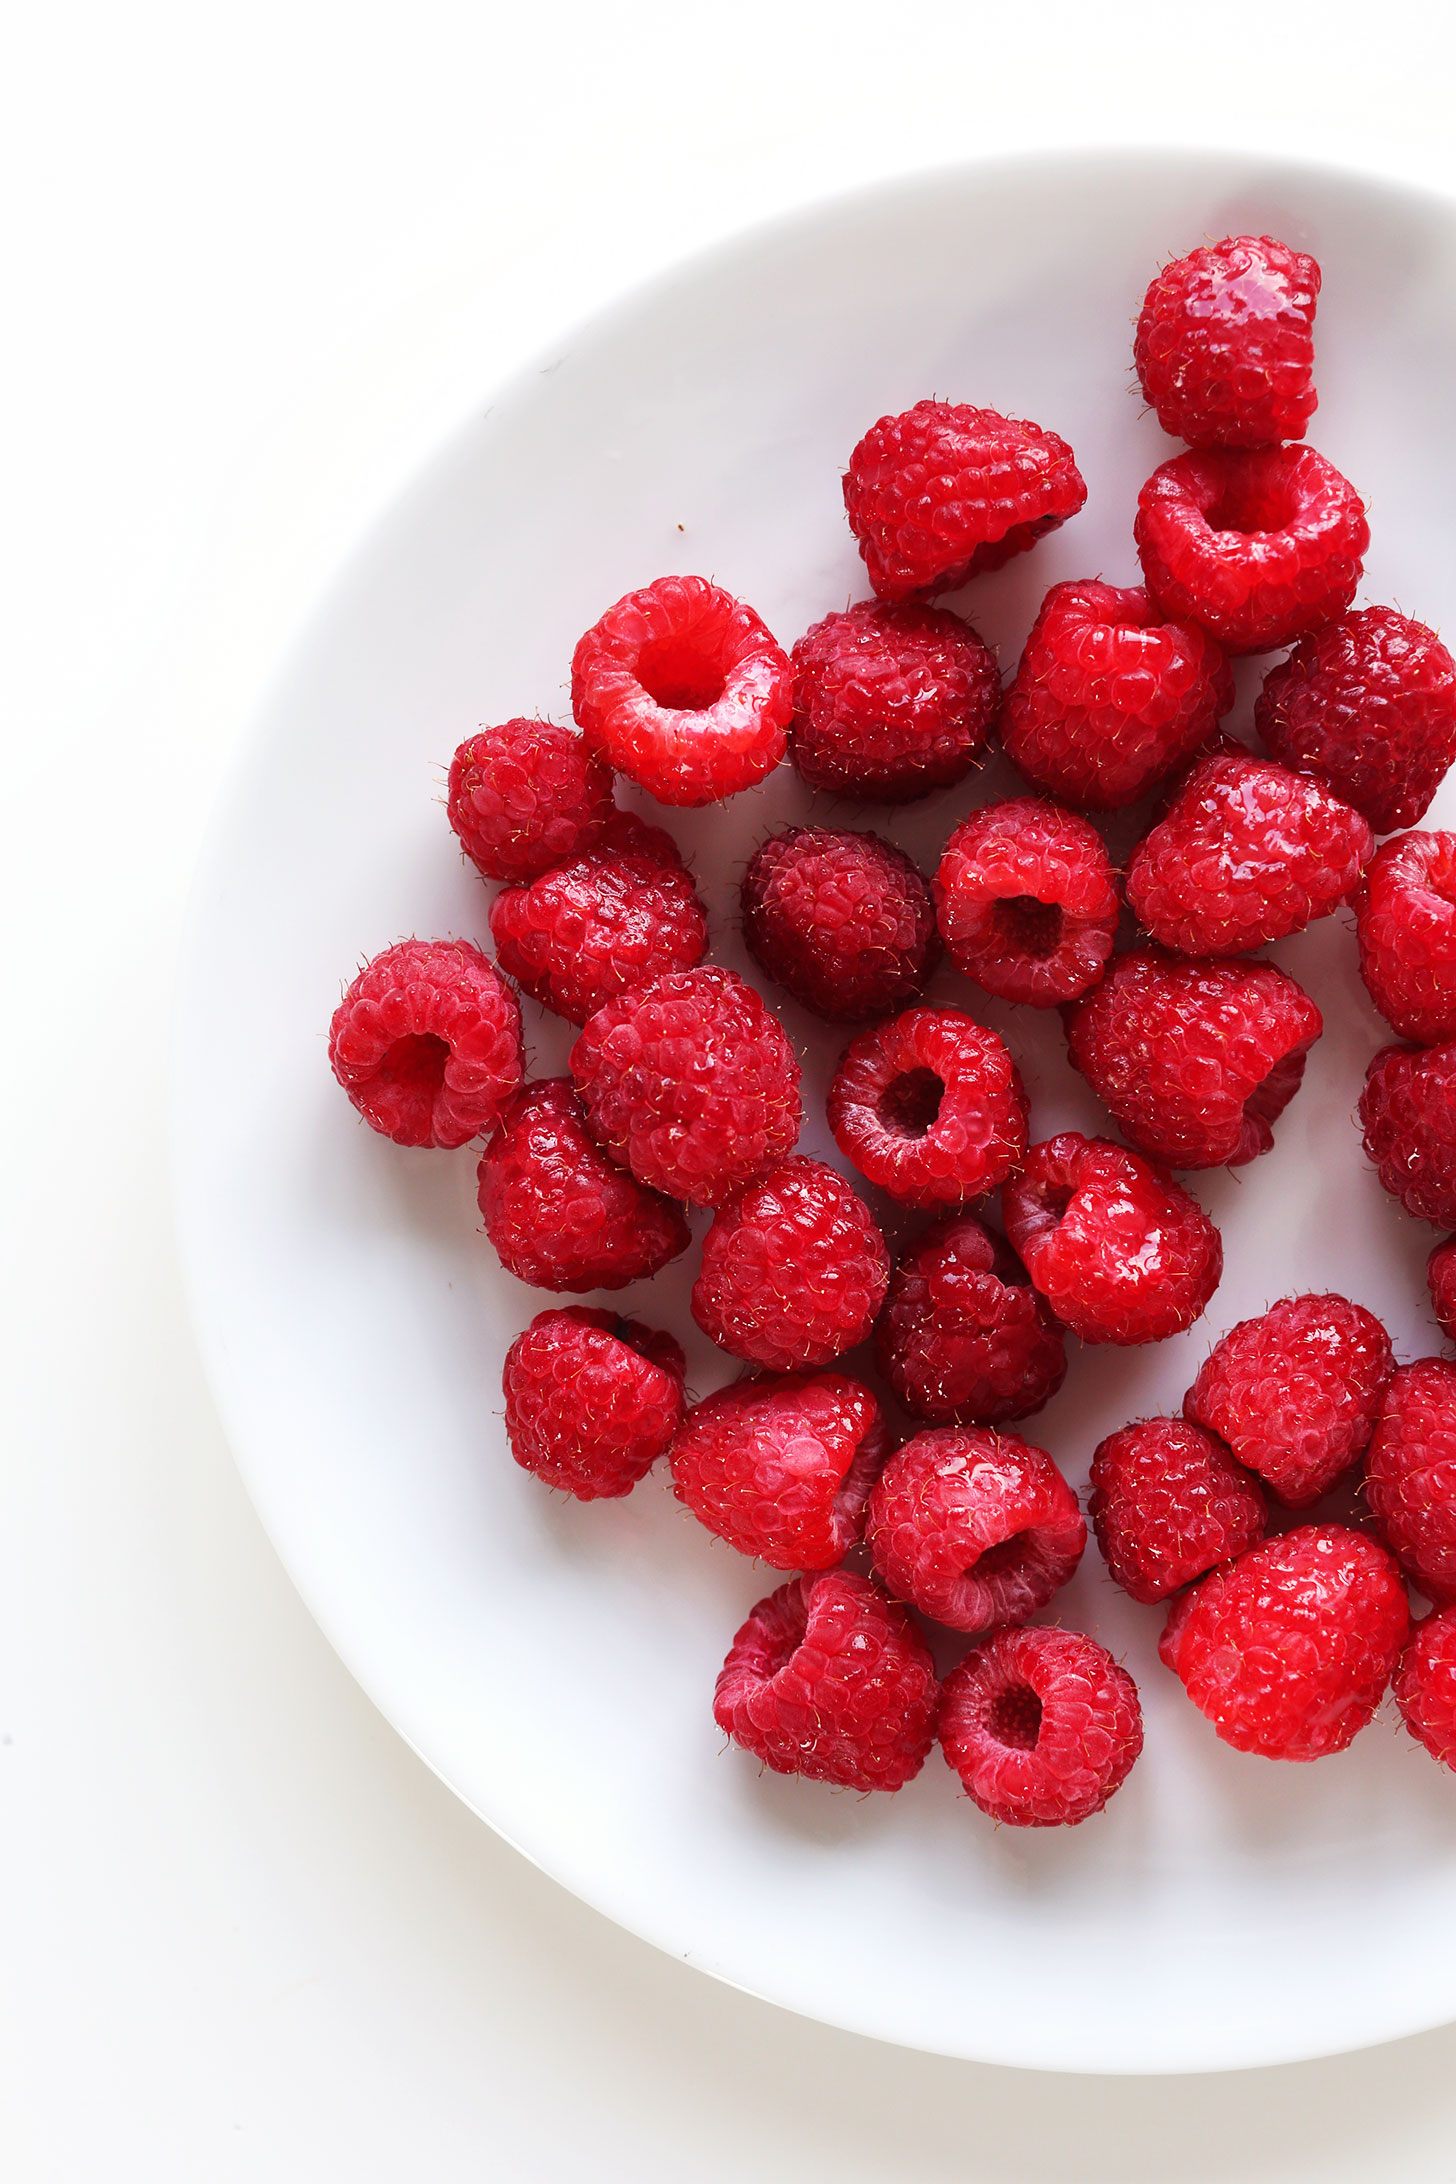 Raspberry Ripple Ice Cream | Minimalist Baker Recipes